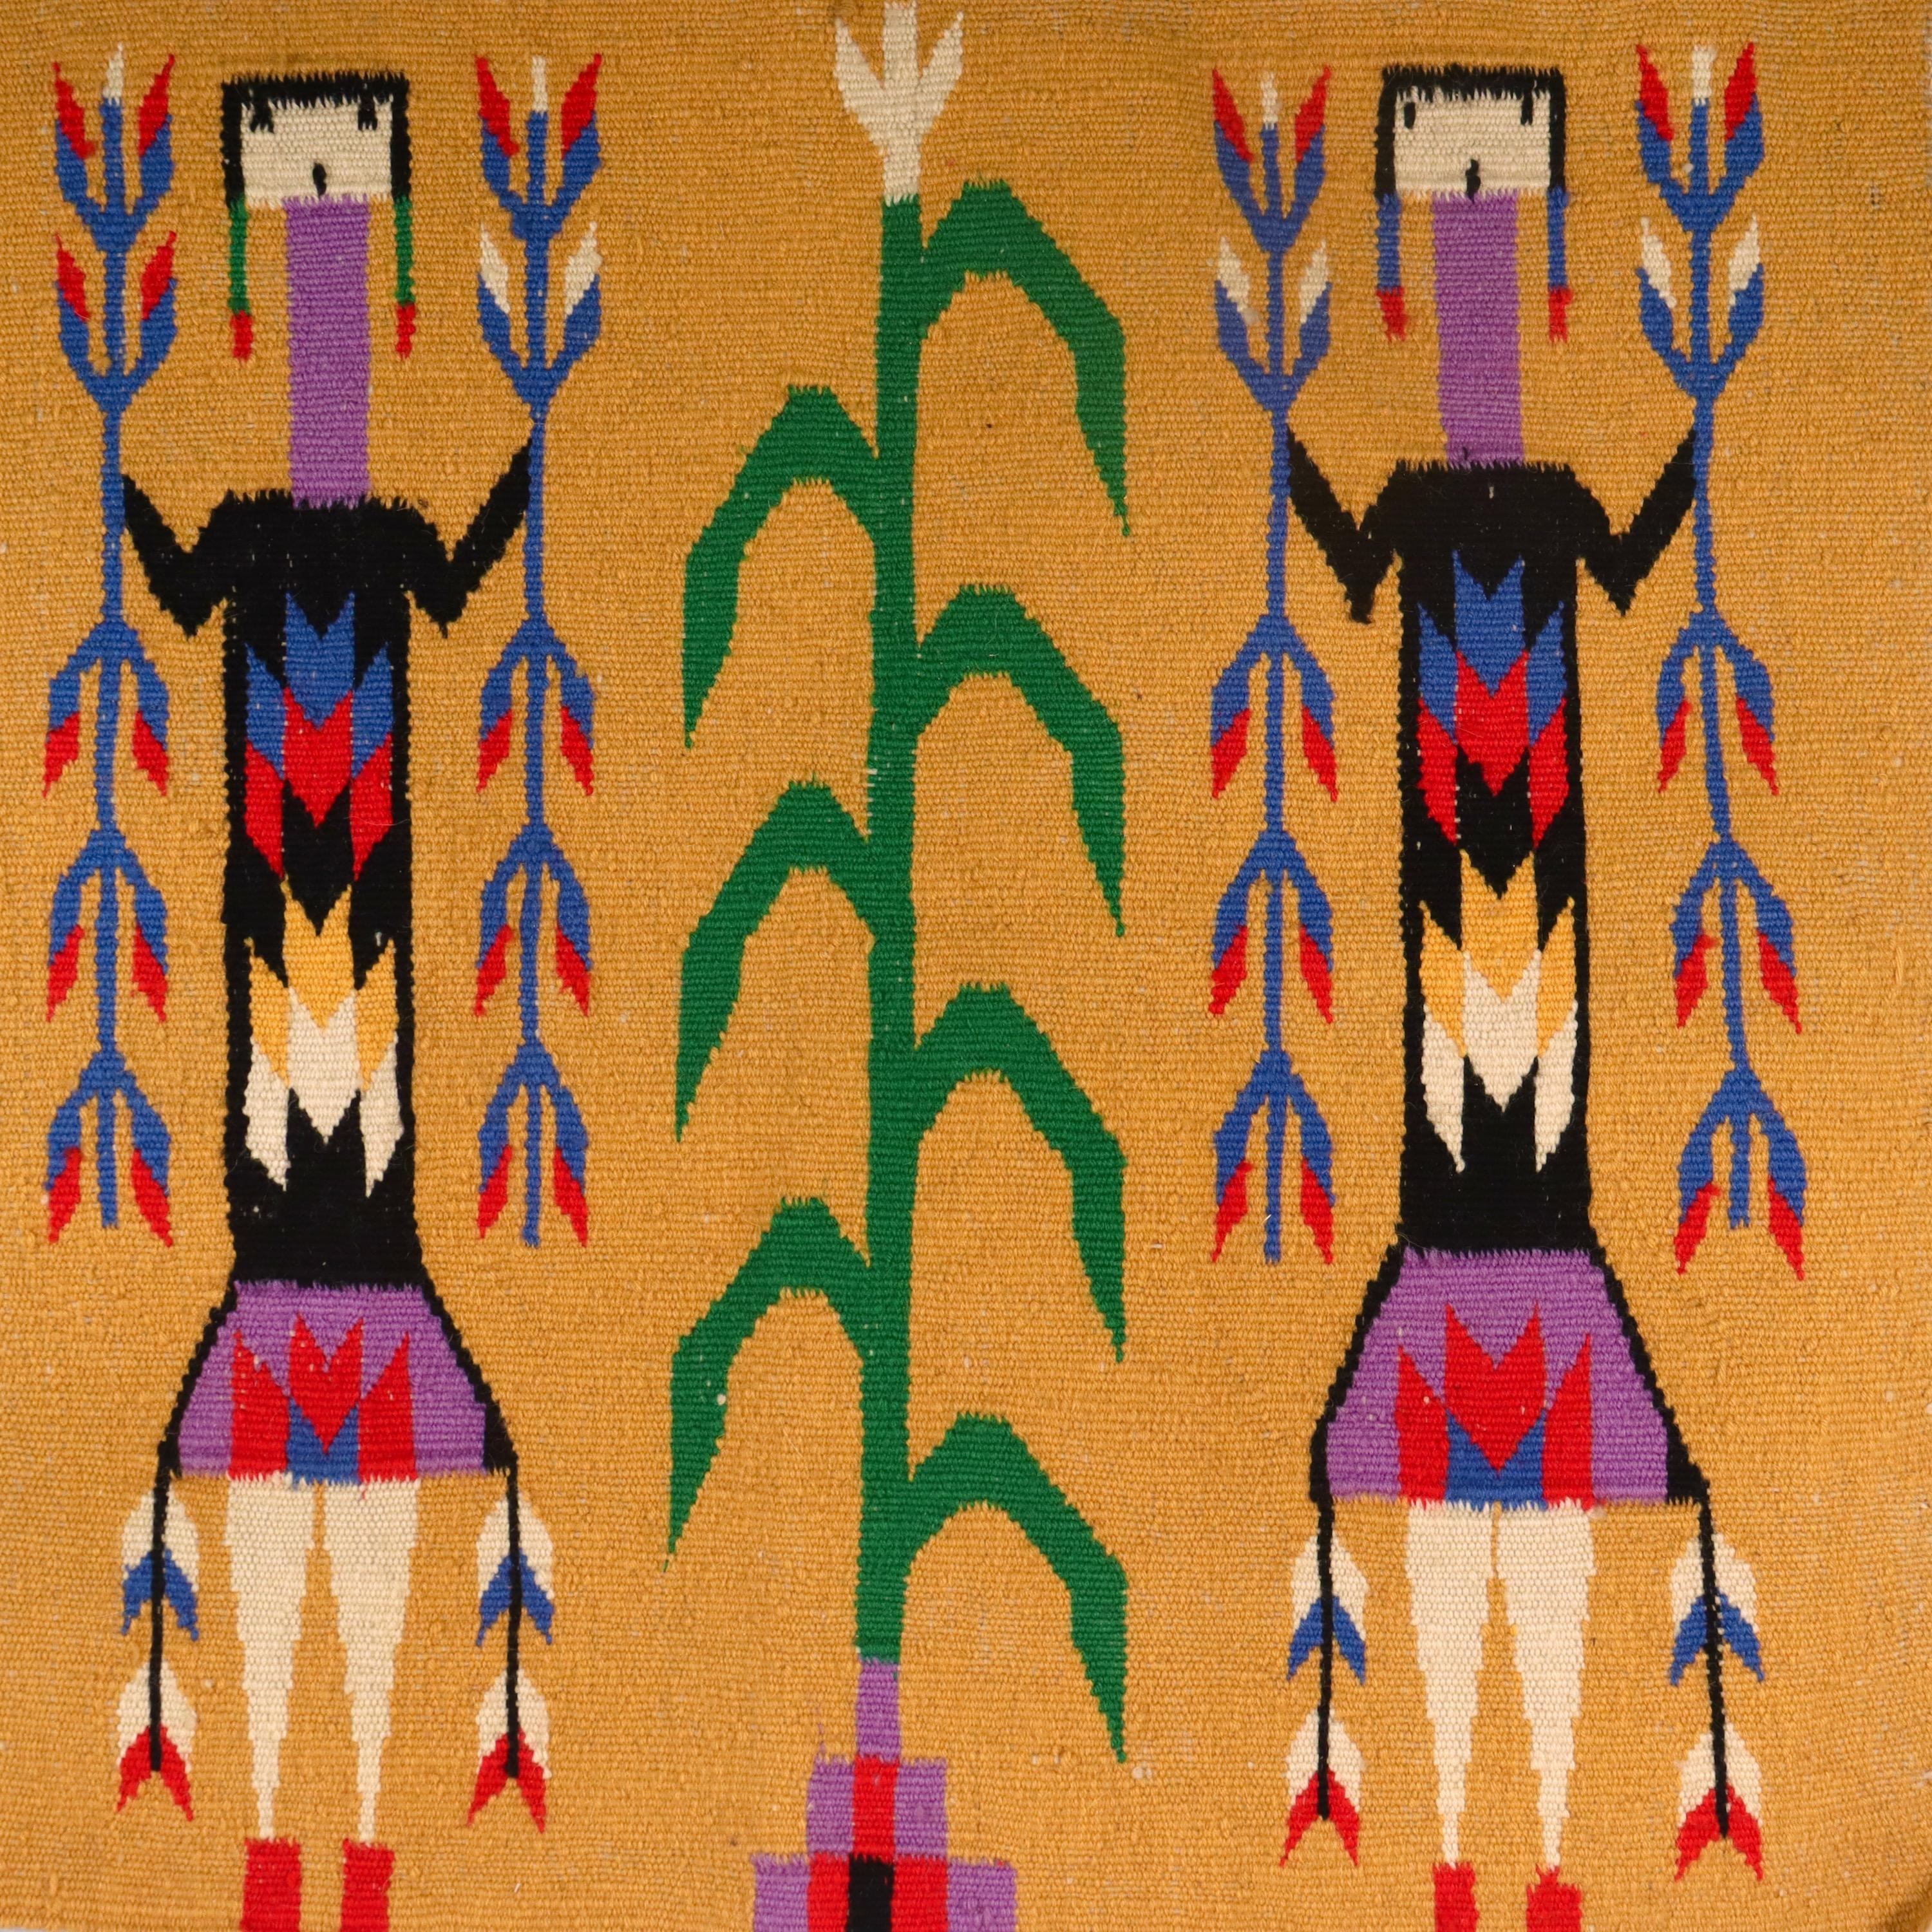 20th Century Vintage Yei Pictoral Navajo Wool Tapestry or Carpet Weaving with Corn People